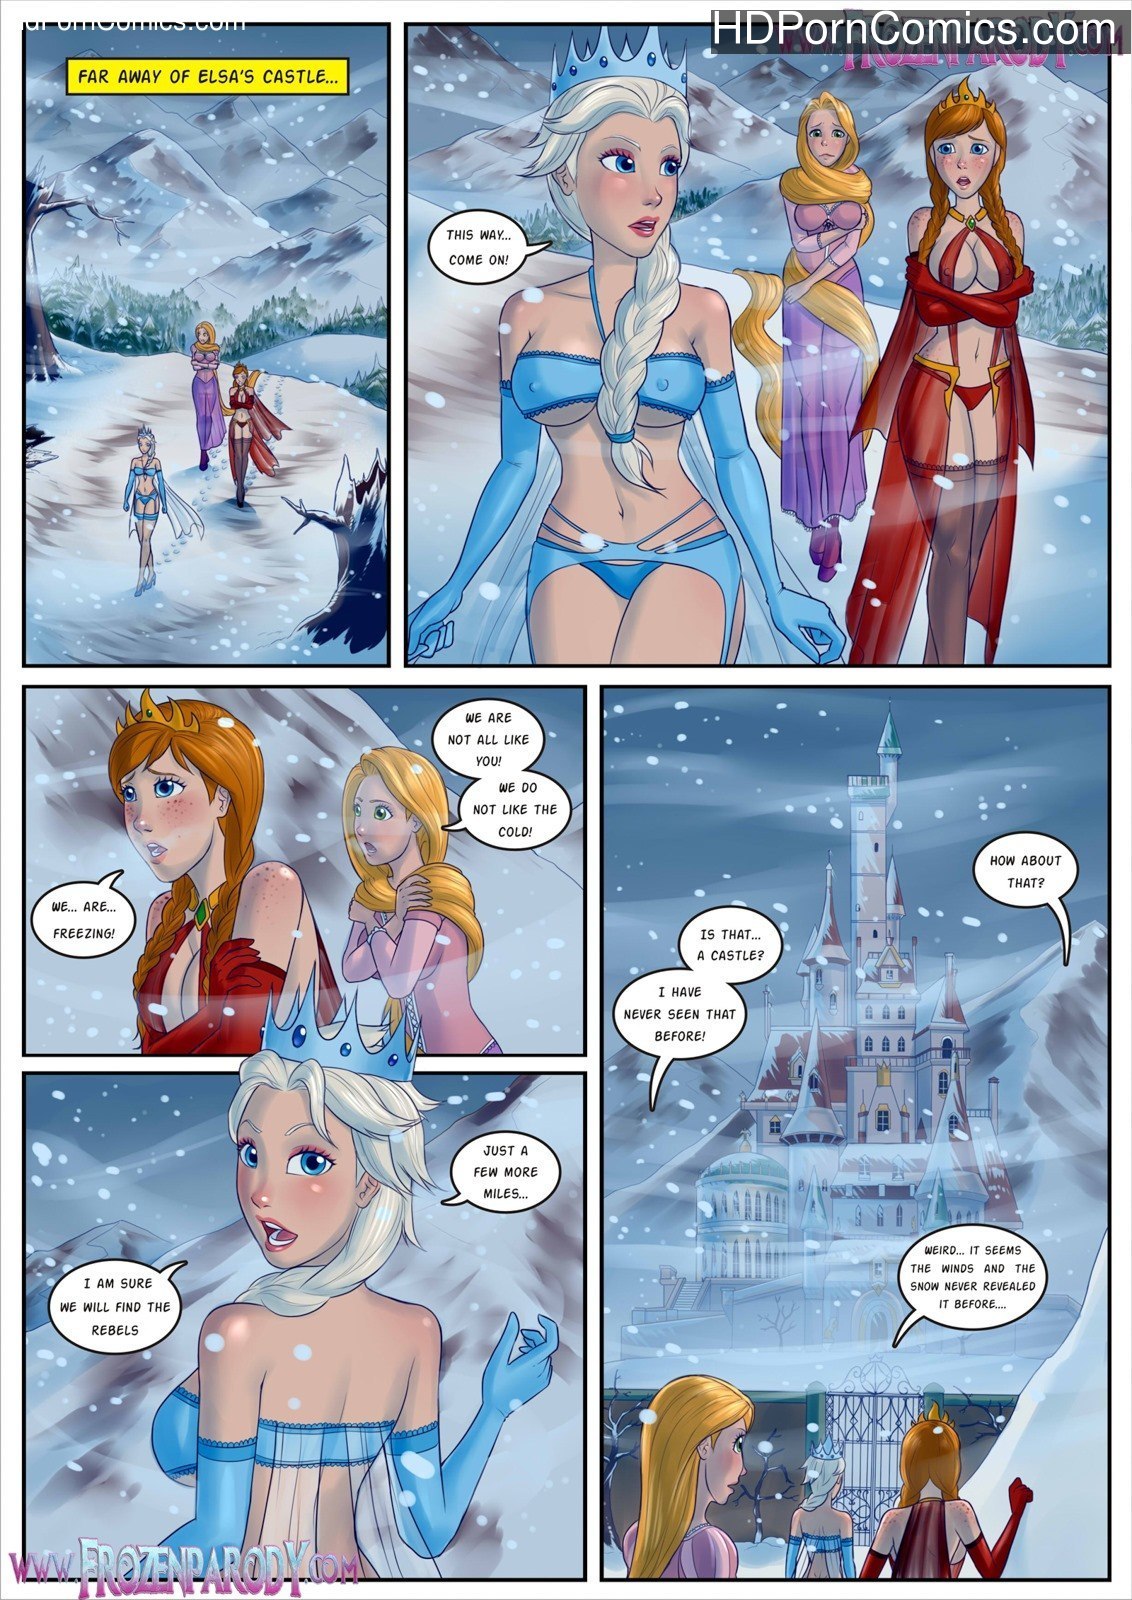 Frozen Parody 13- Beauty And Beast free Cartoon Porn Comic â€“ HD Porn Comics